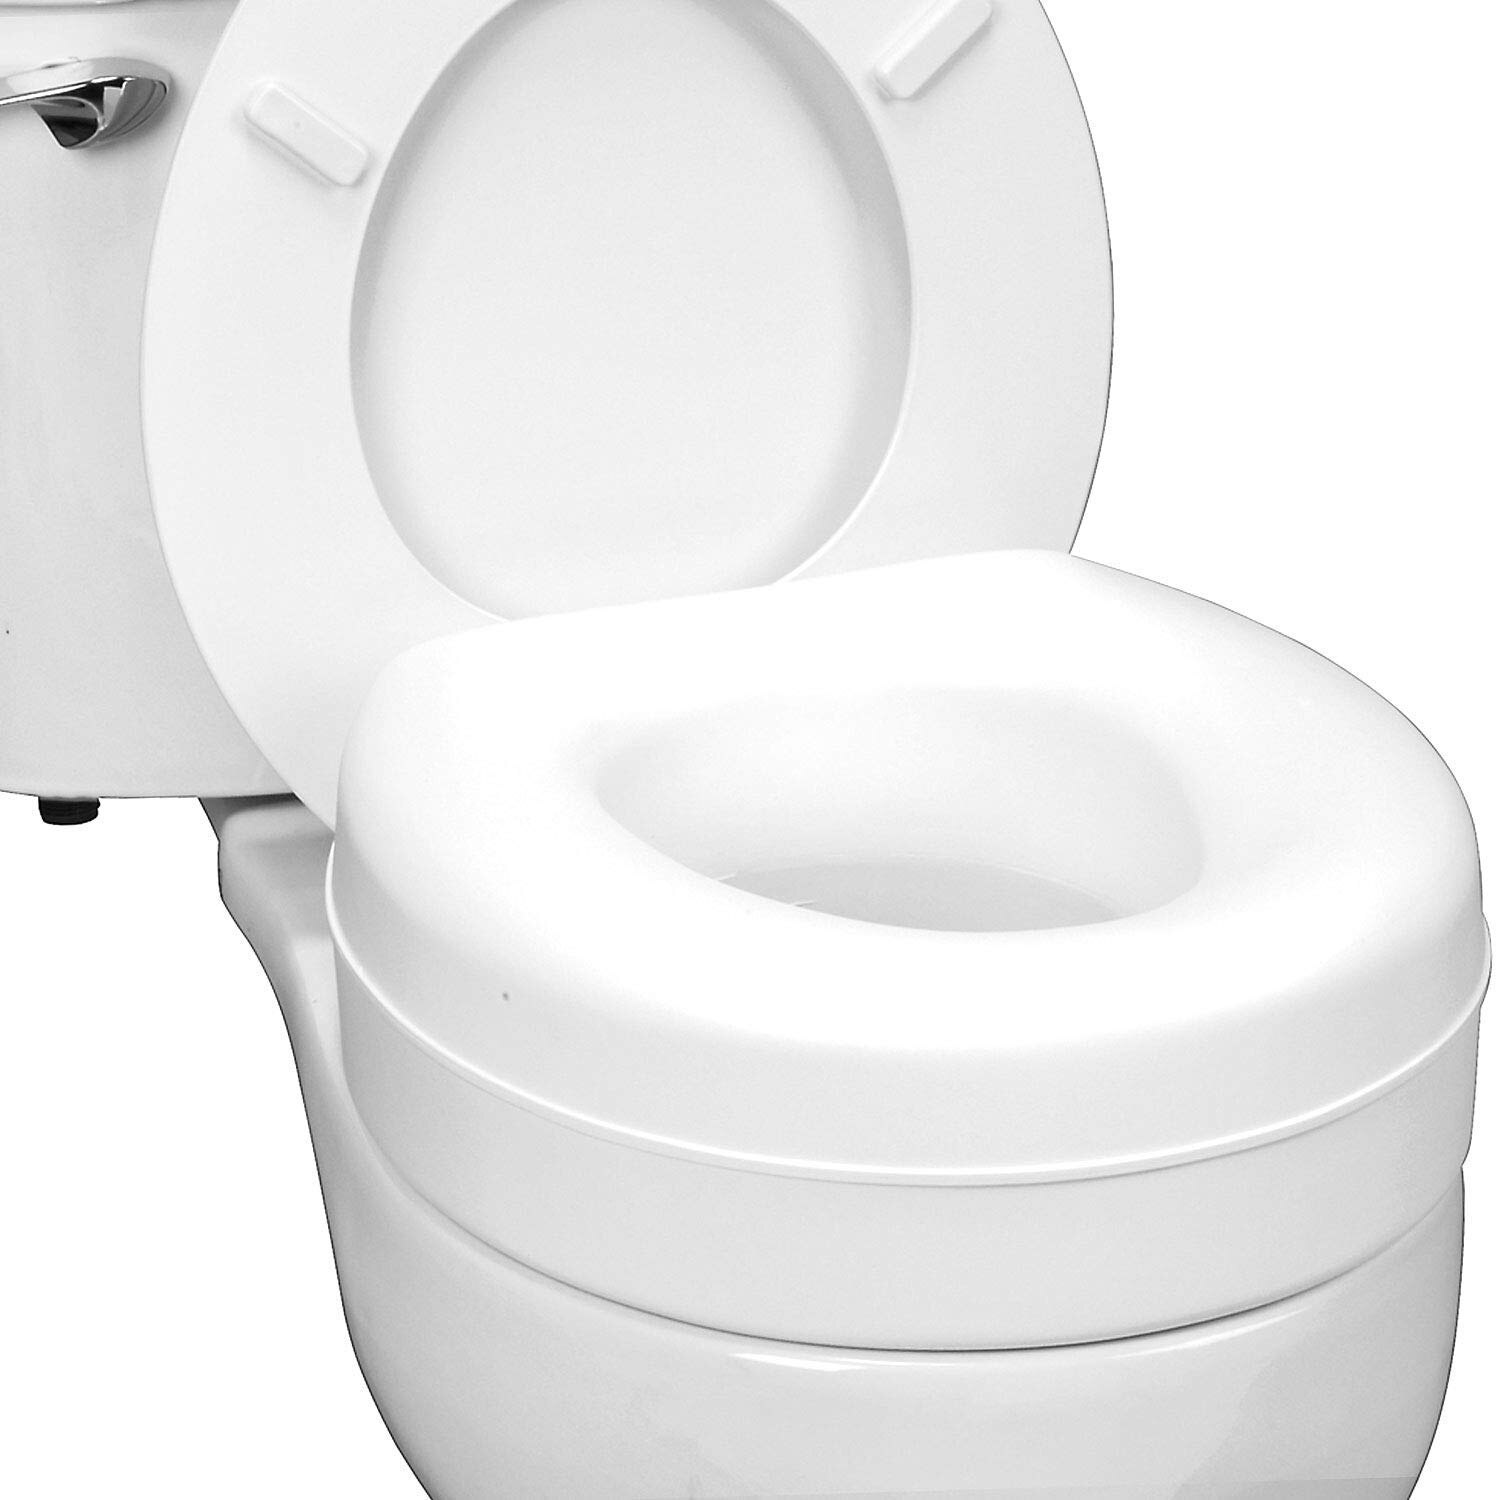 HealthSmart Portable Elevated Toilet Seat Riser, White